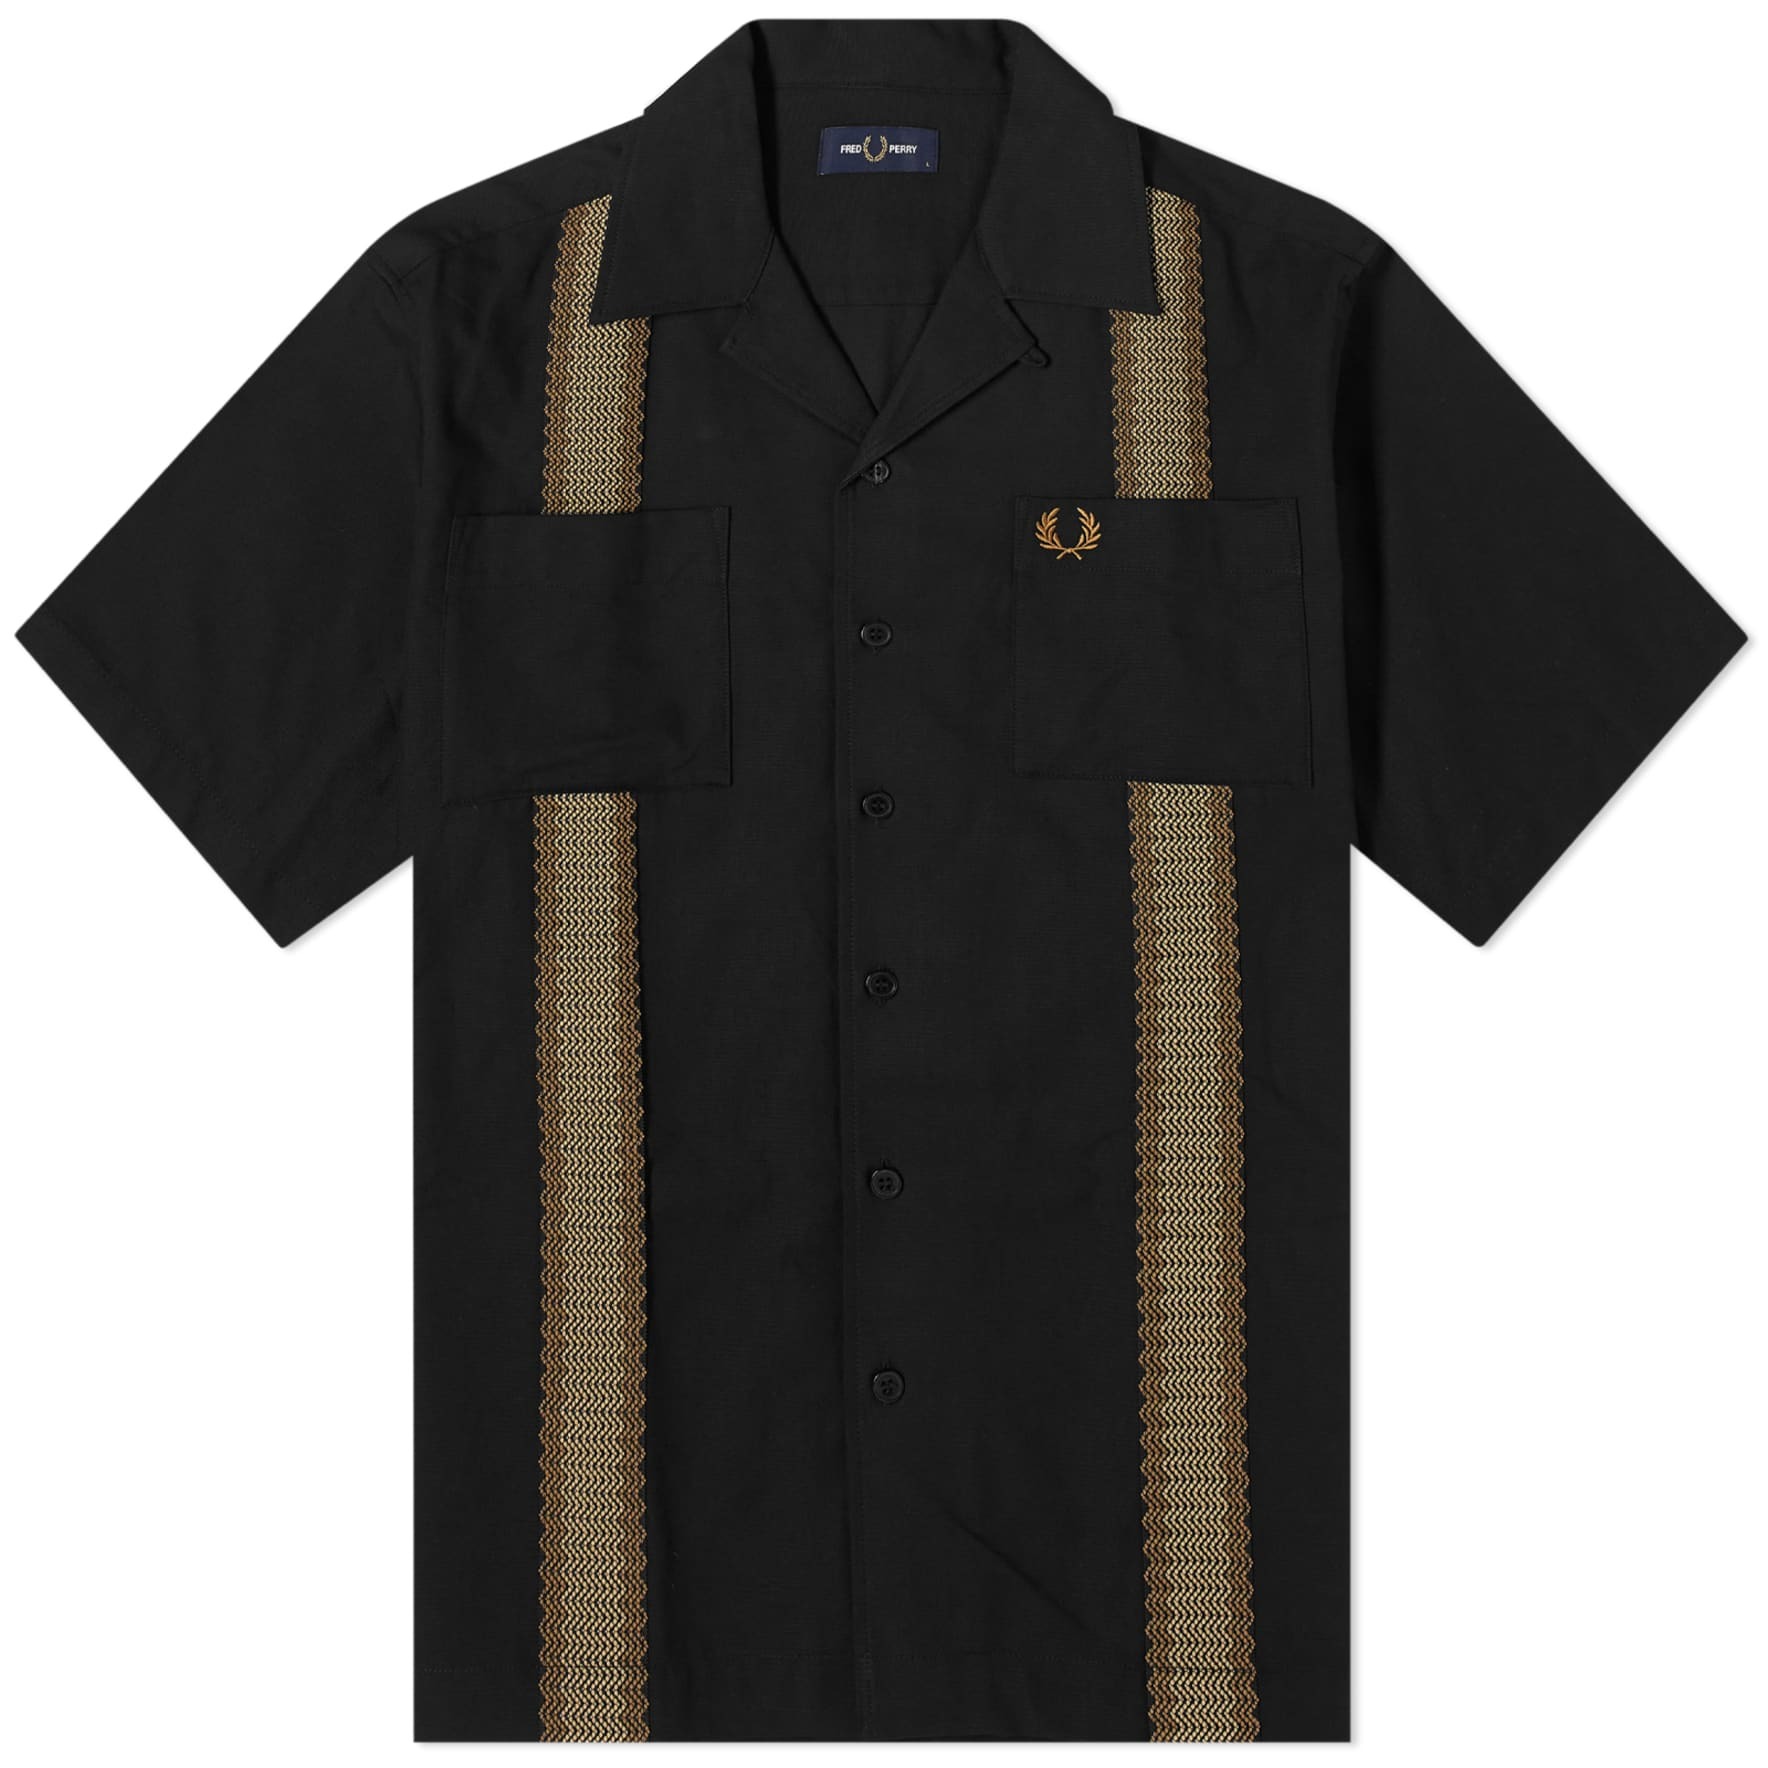 Рубашка Fred Perry Tape Short Sleeve Vacation, черный футболка fred perry contrast tape ringer красновато коричневый серый